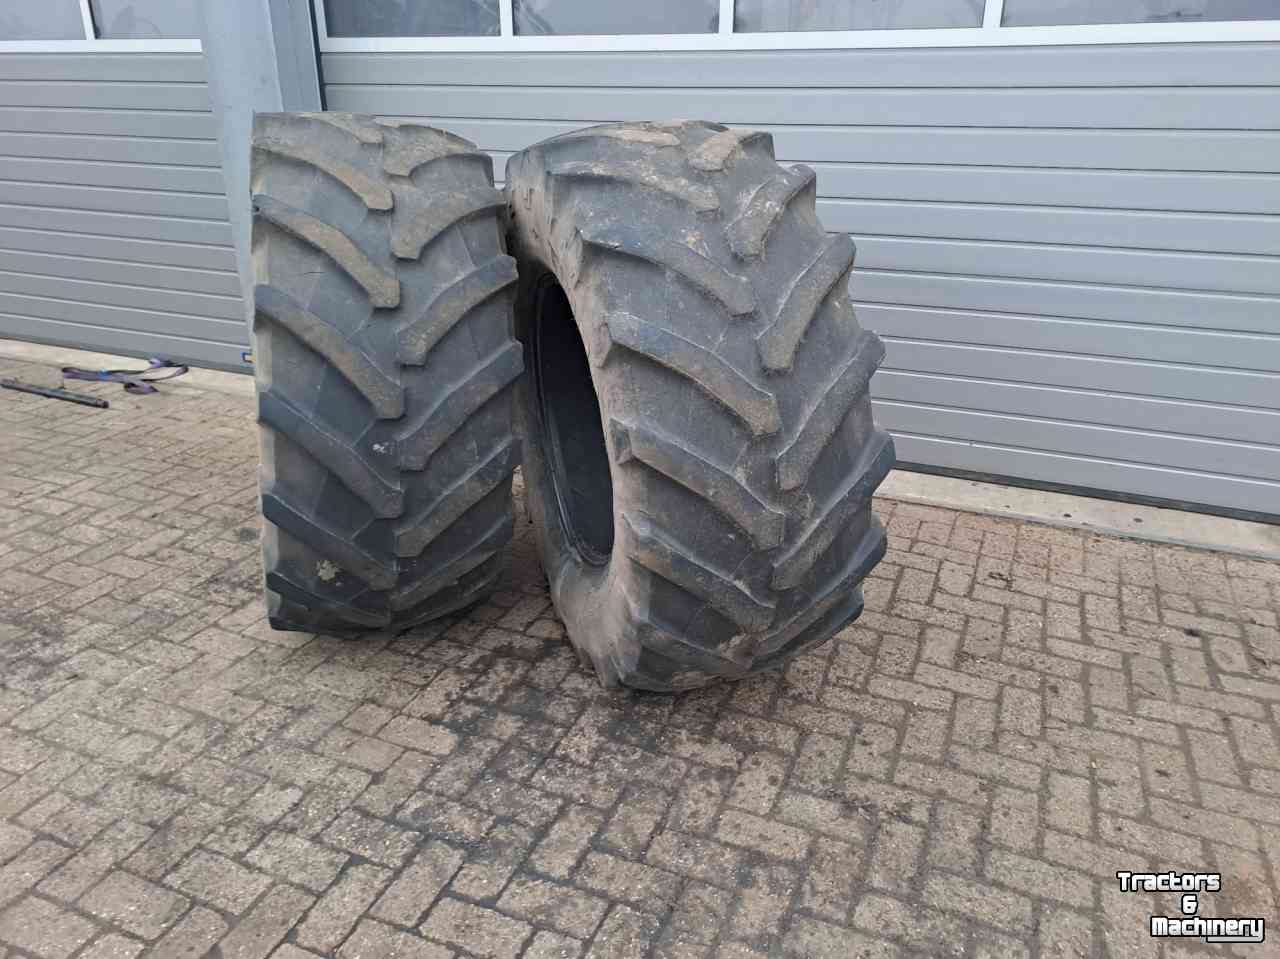 Wheels, Tyres, Rims & Dual spacers Trelleborg 600/65 R 28